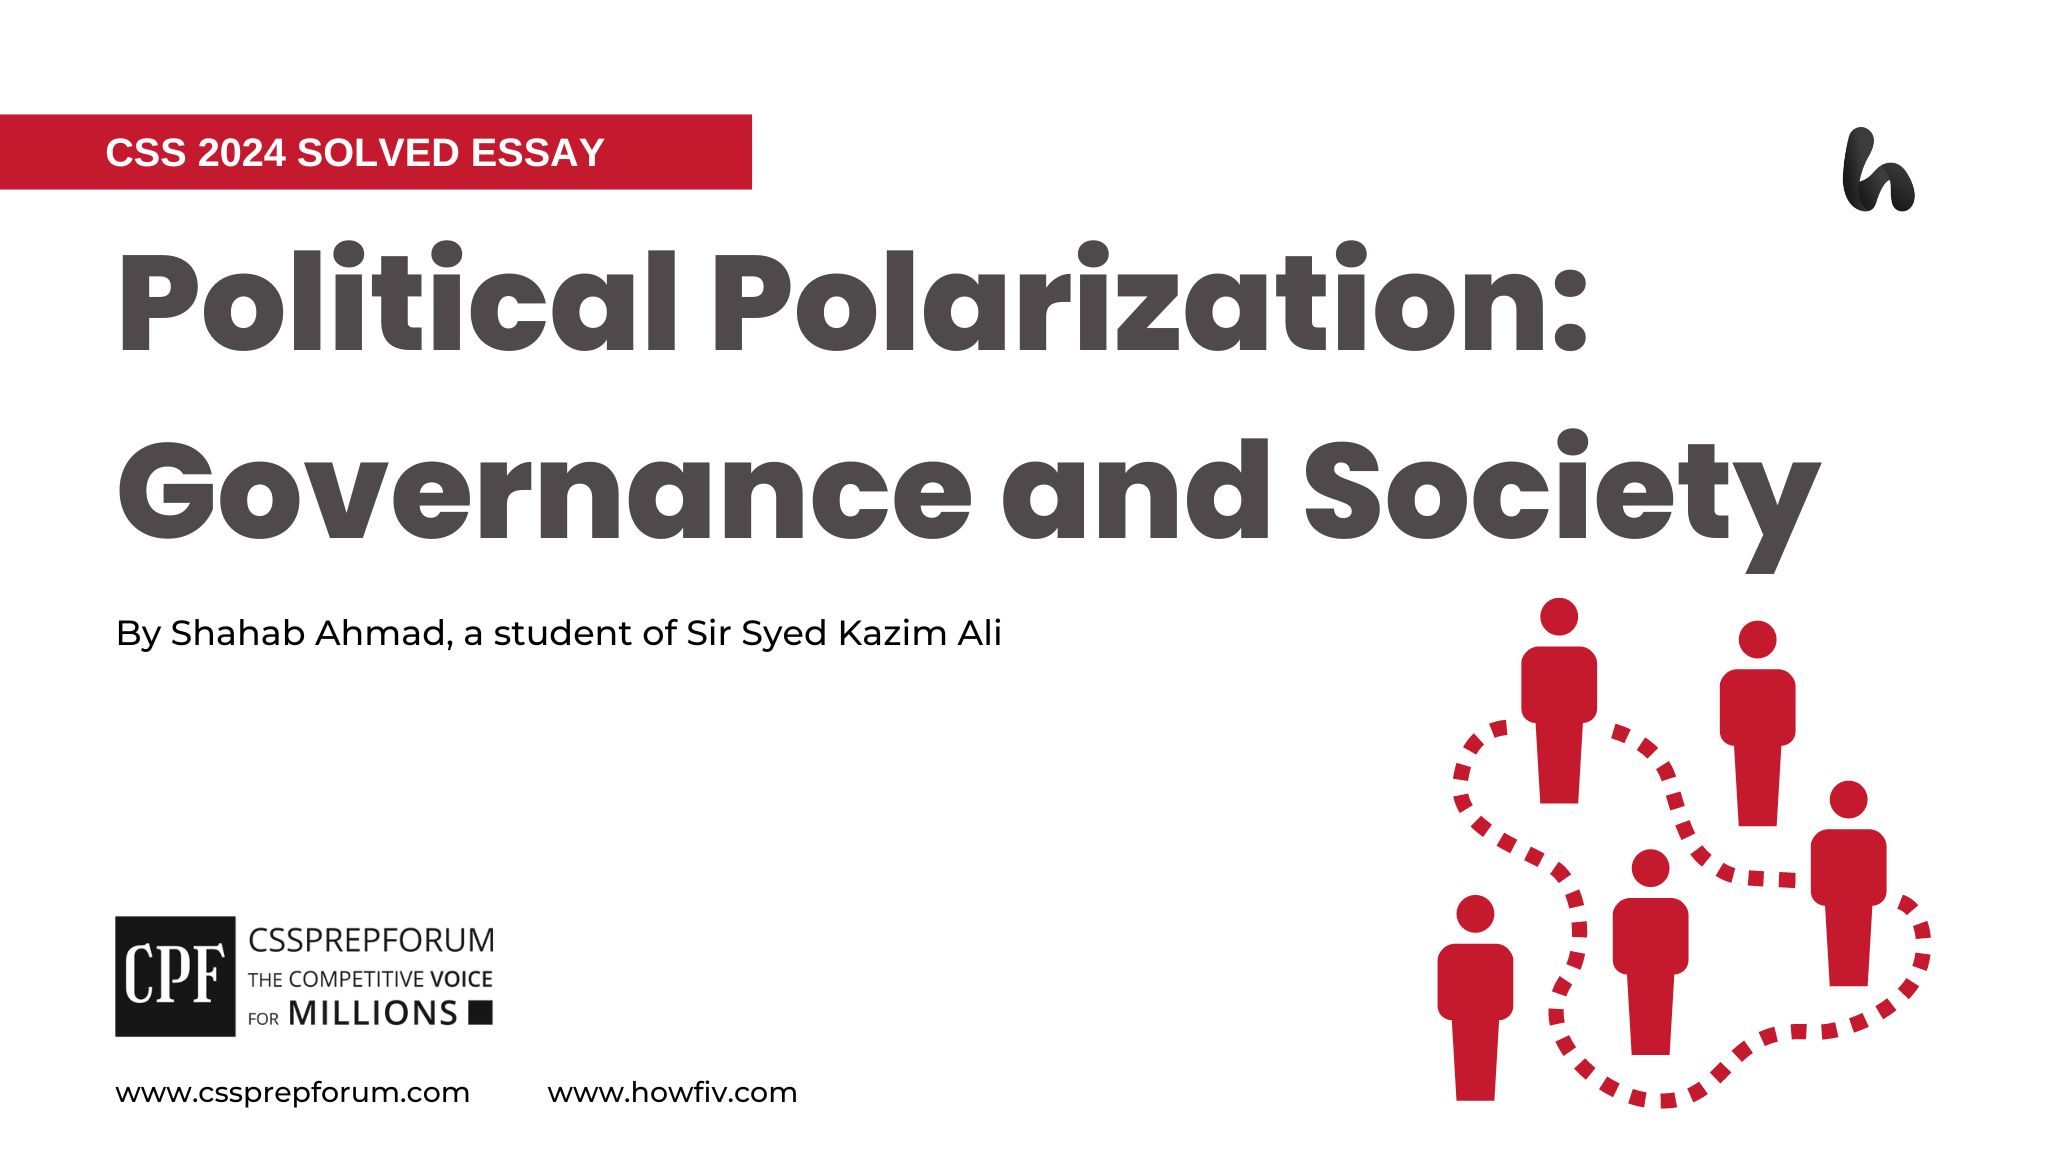 Political Polarization: Governance and Society by Shahab Ahmed